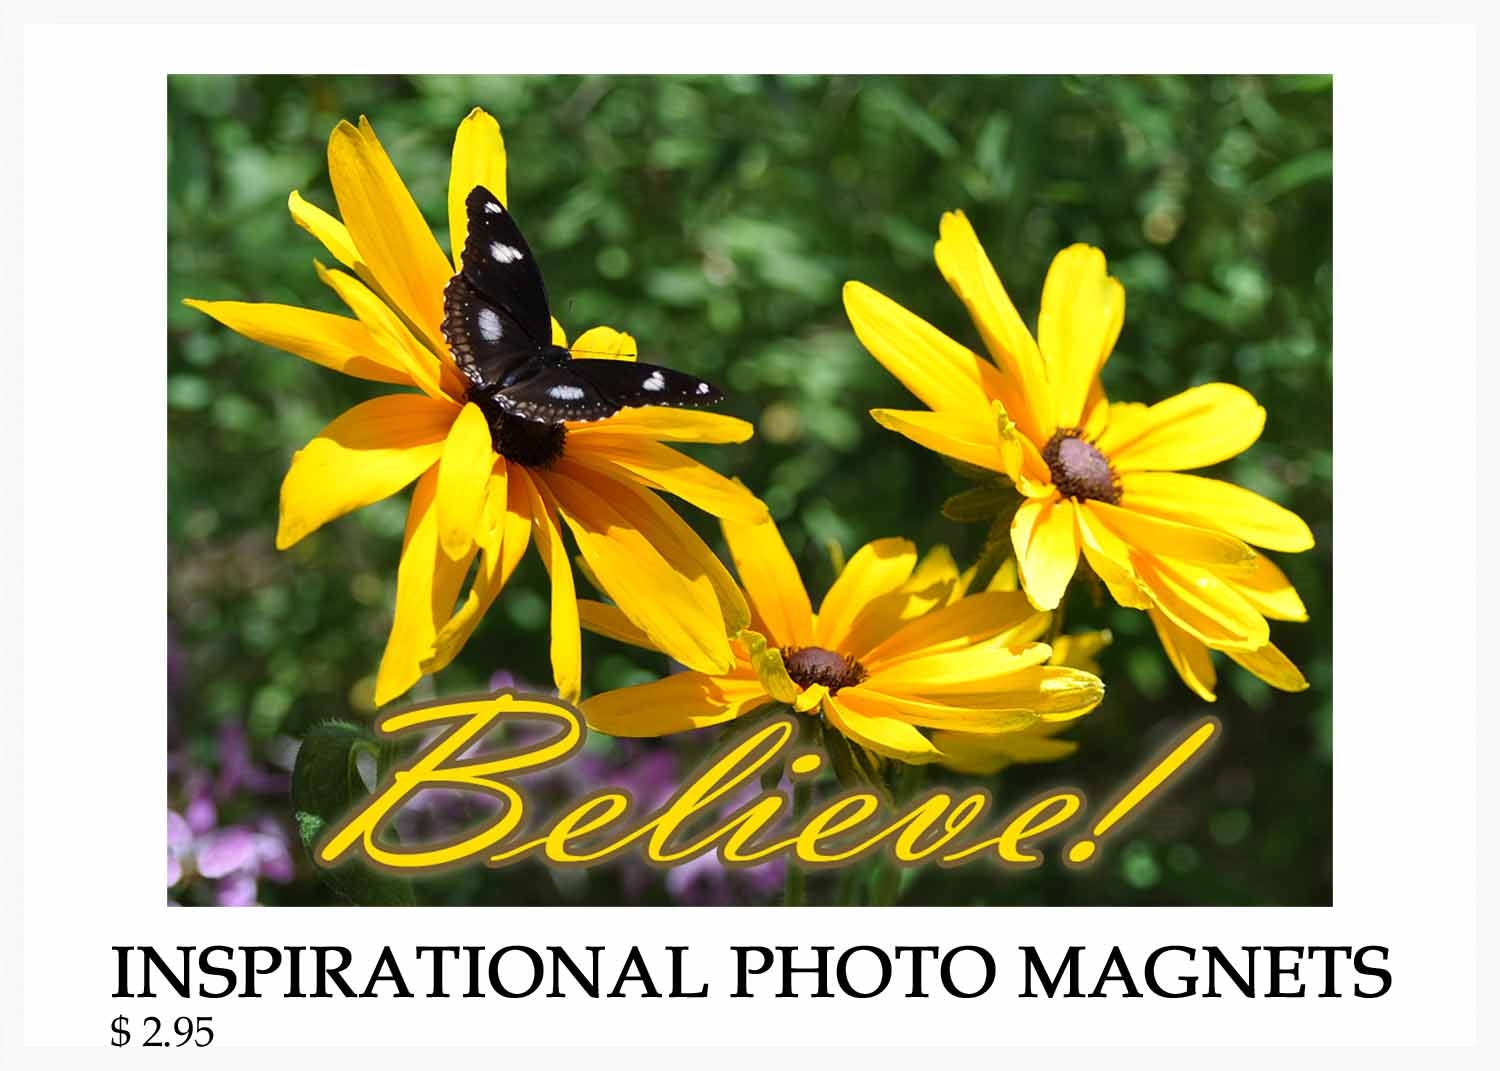 Inspirational photo magnets